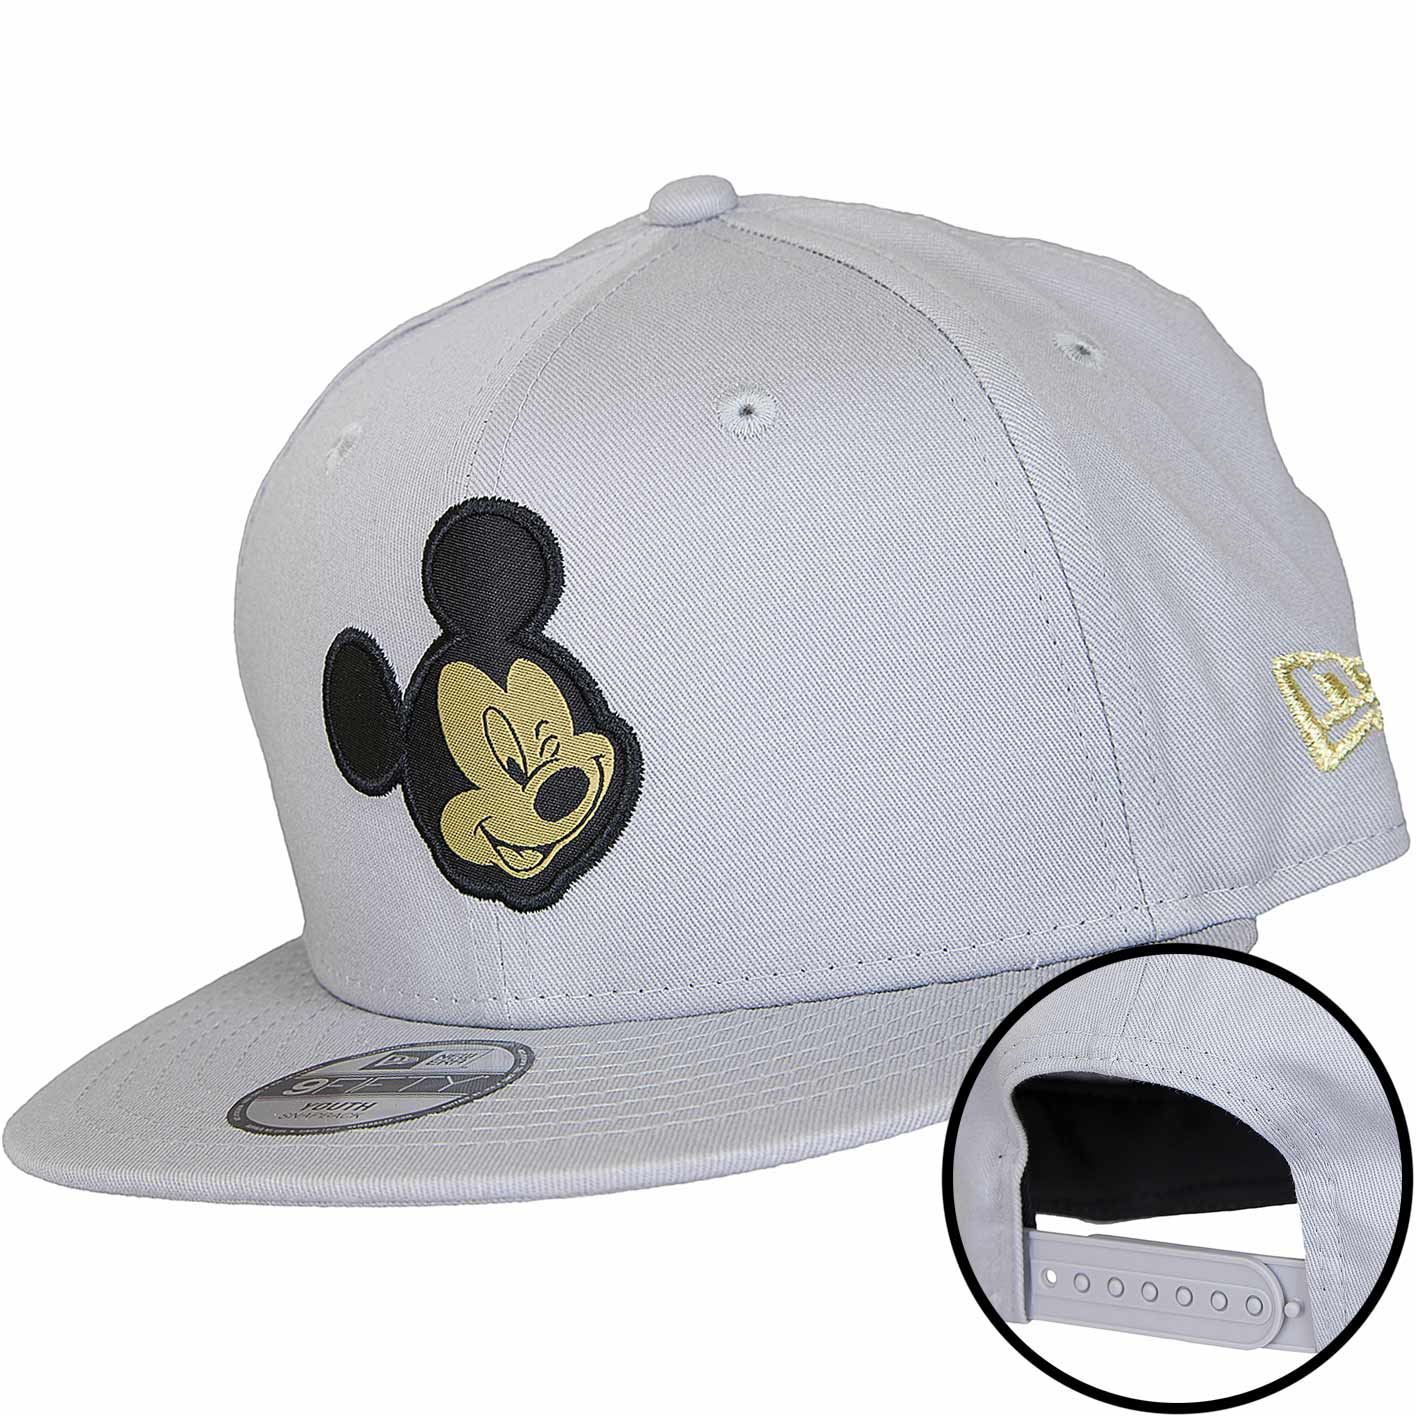 ☆ New Era 9Fifty Kinder Snapback Cap Character Mickey Mouse grau/gold -  hier bestellen!